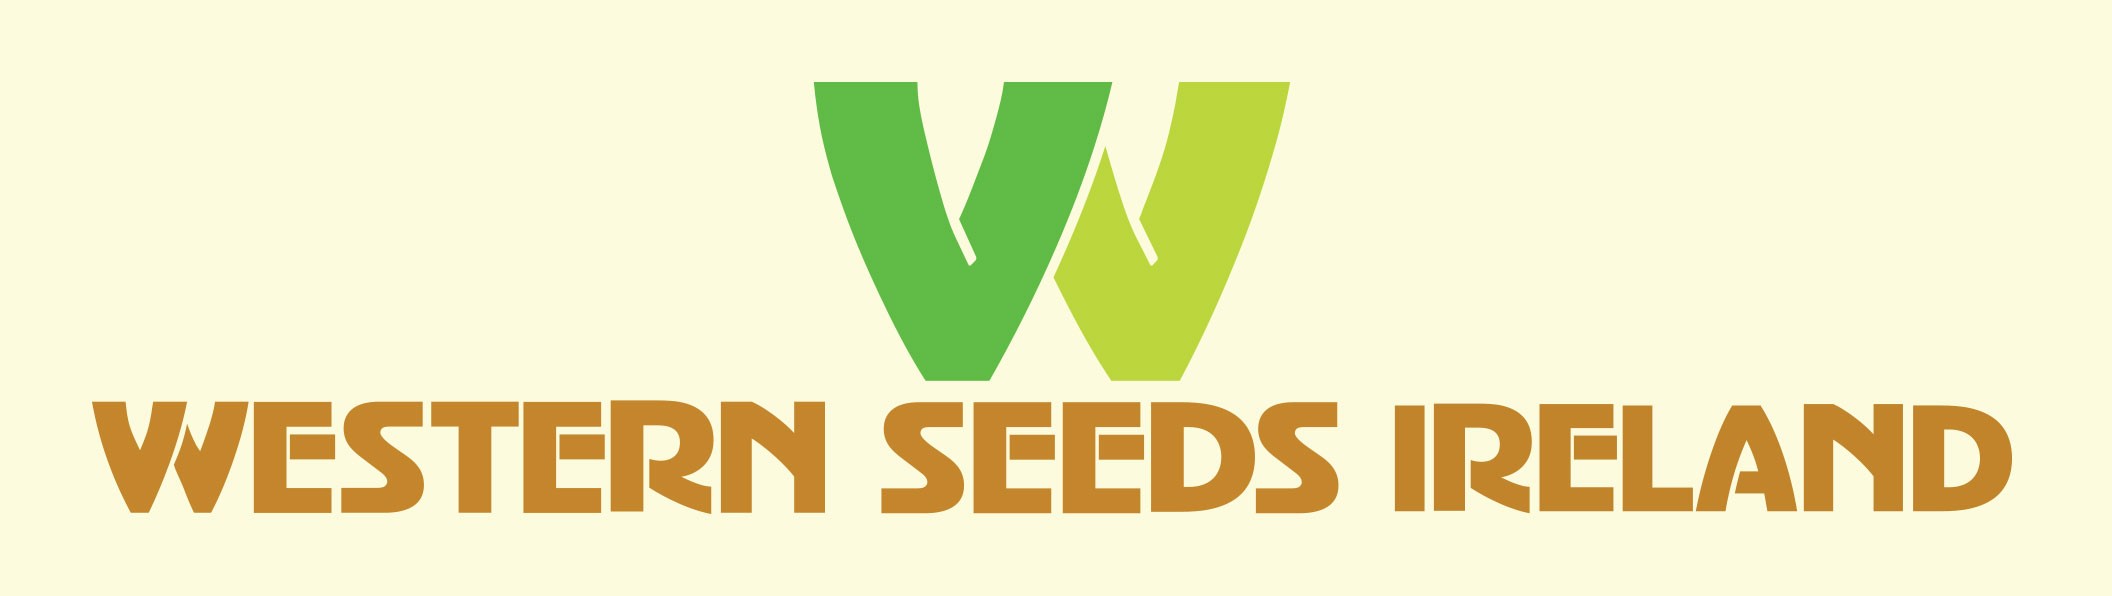 Western Seeds Ireland